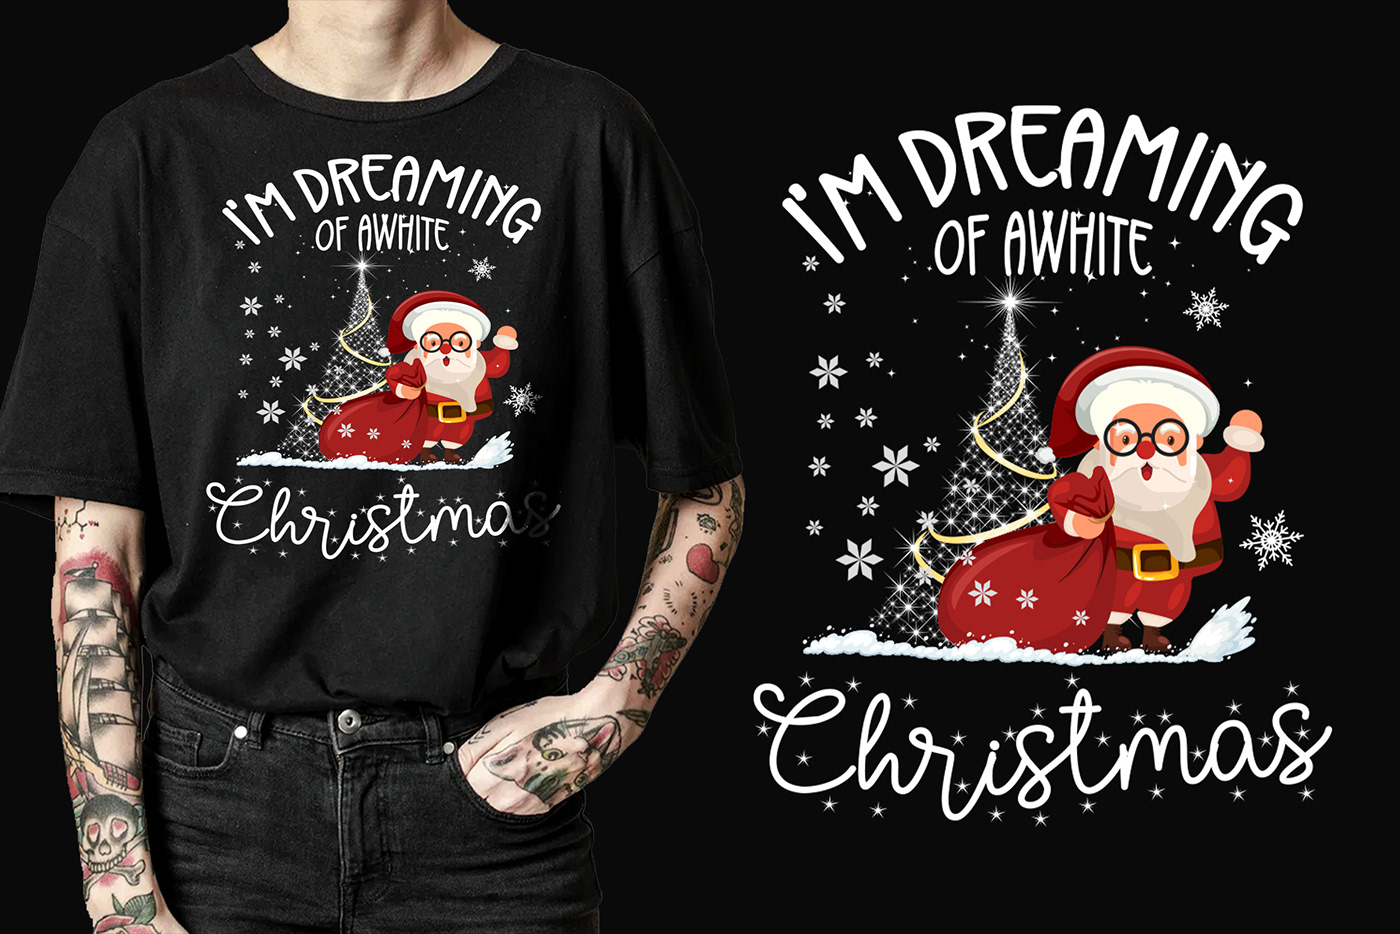 Merry Christmas typography
T-shirt design